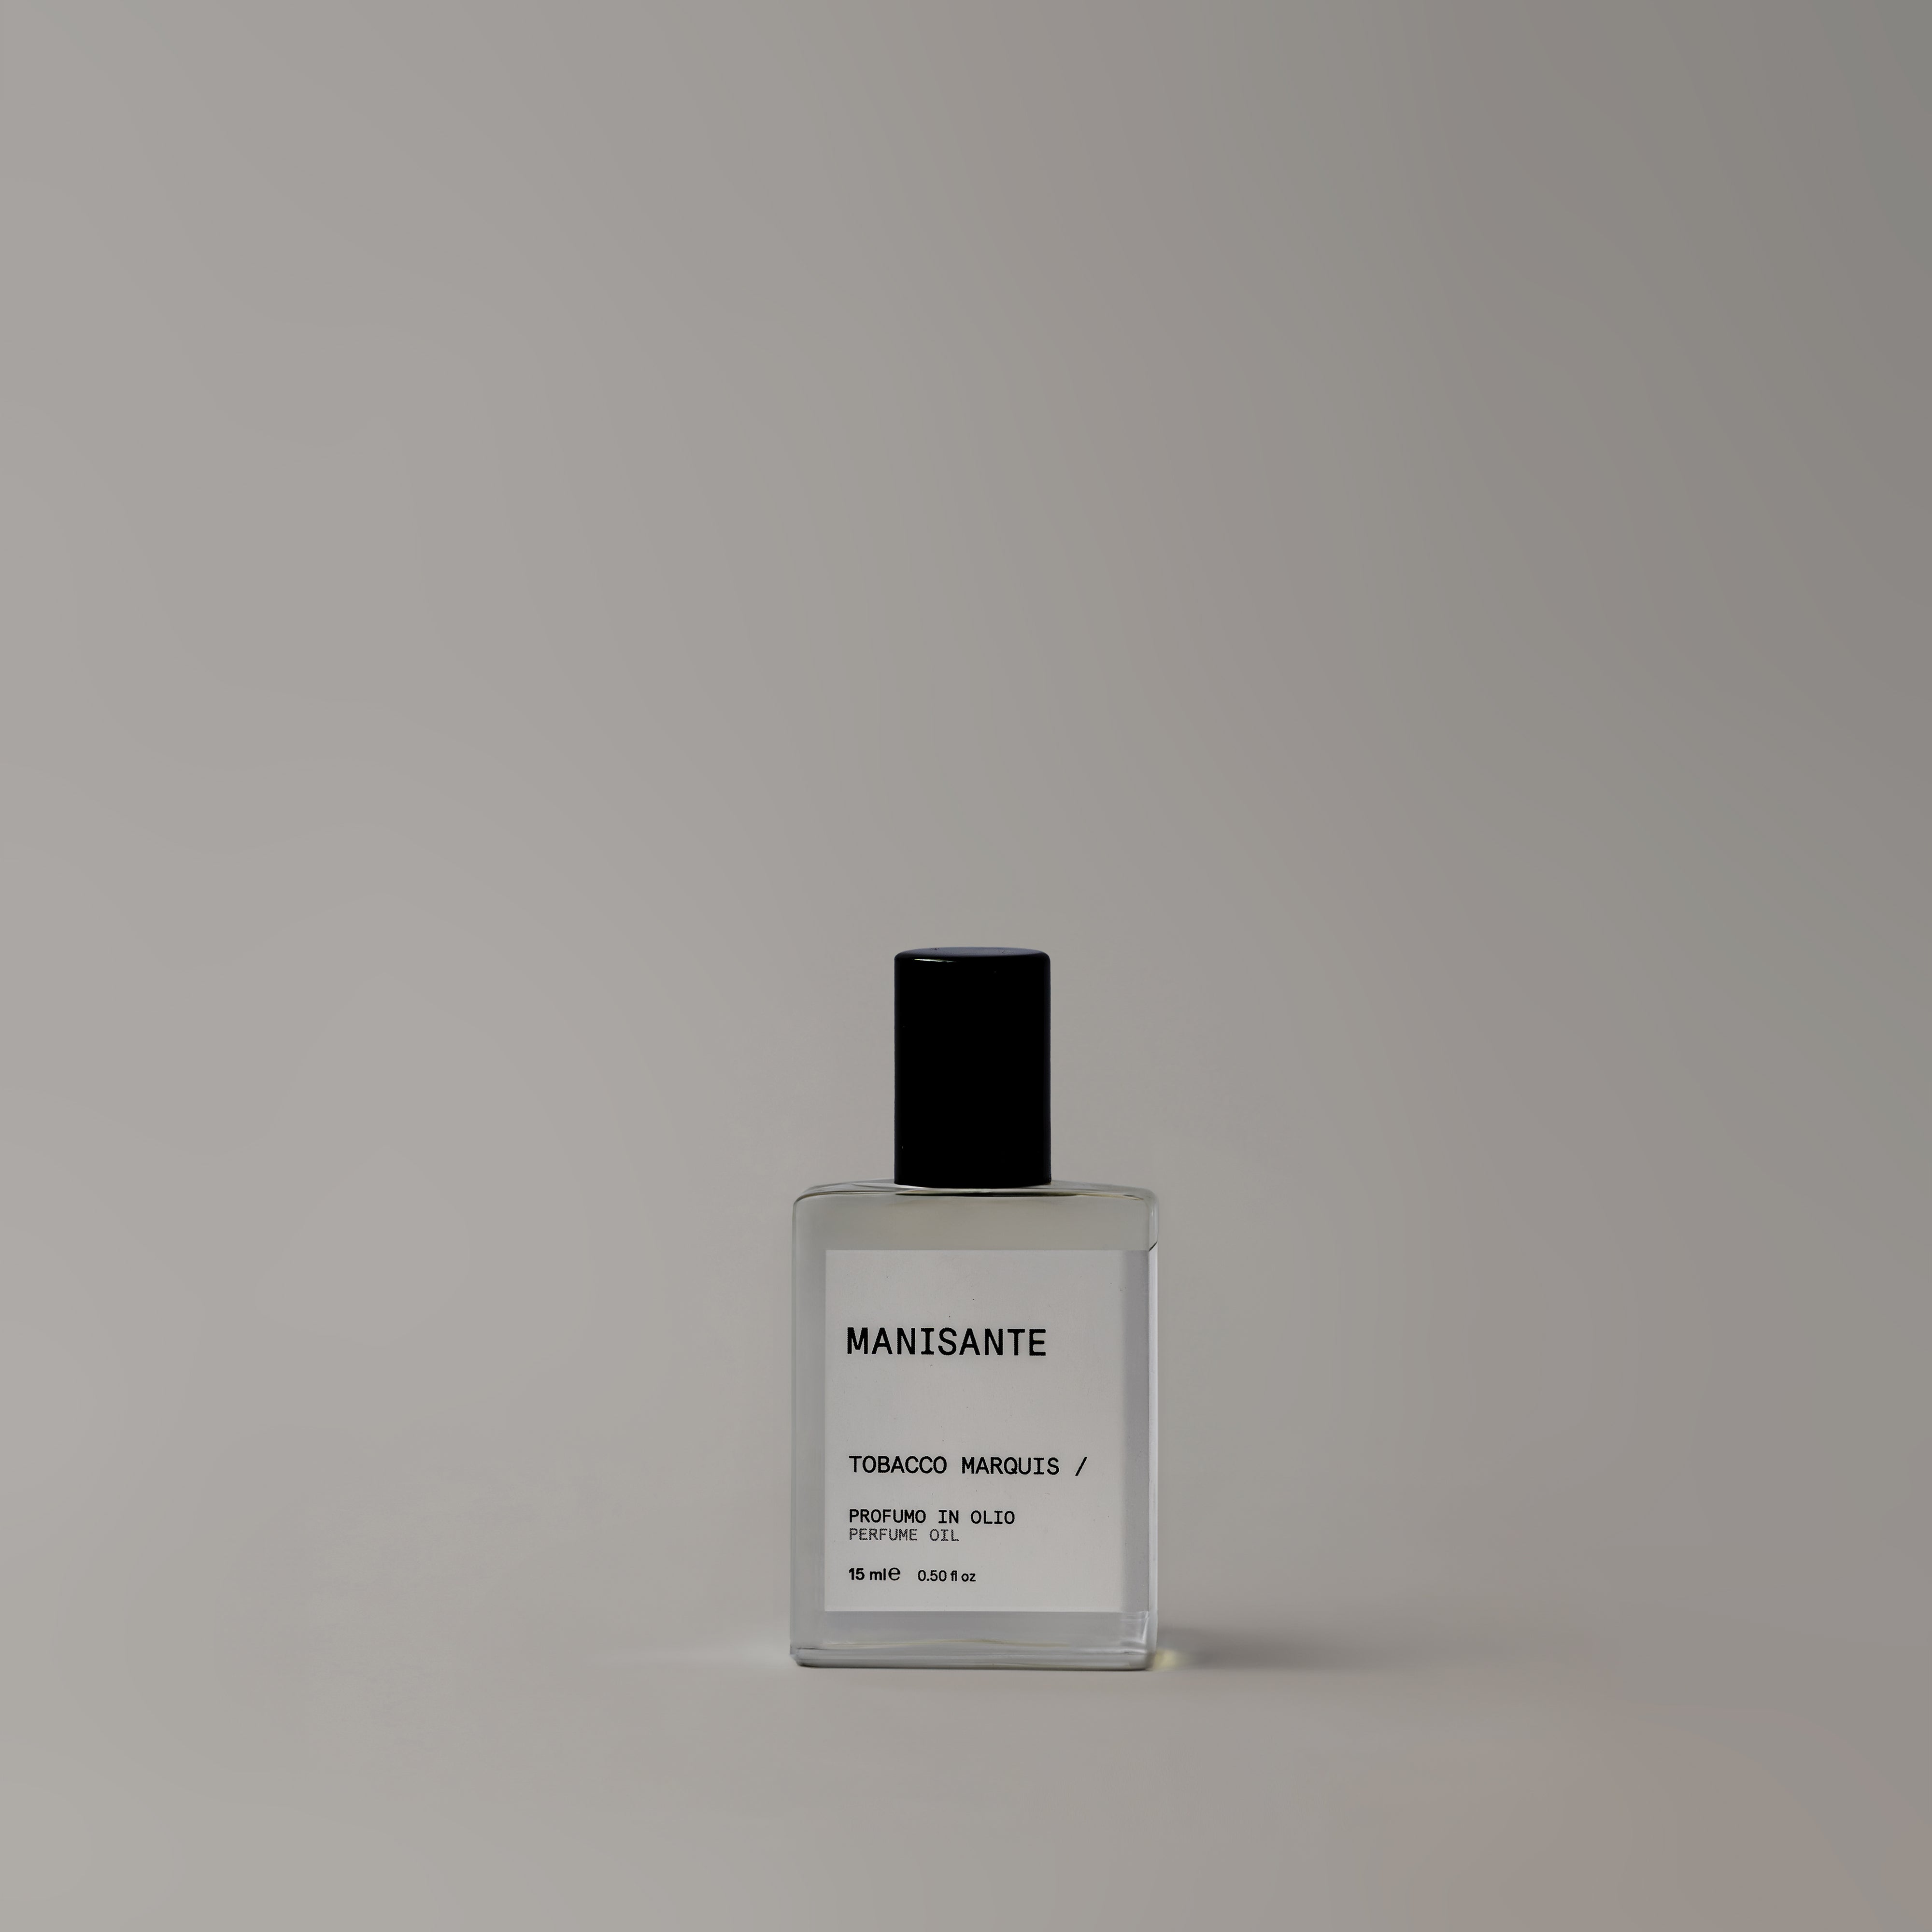 Tobacco Marquis / Perfume Oil